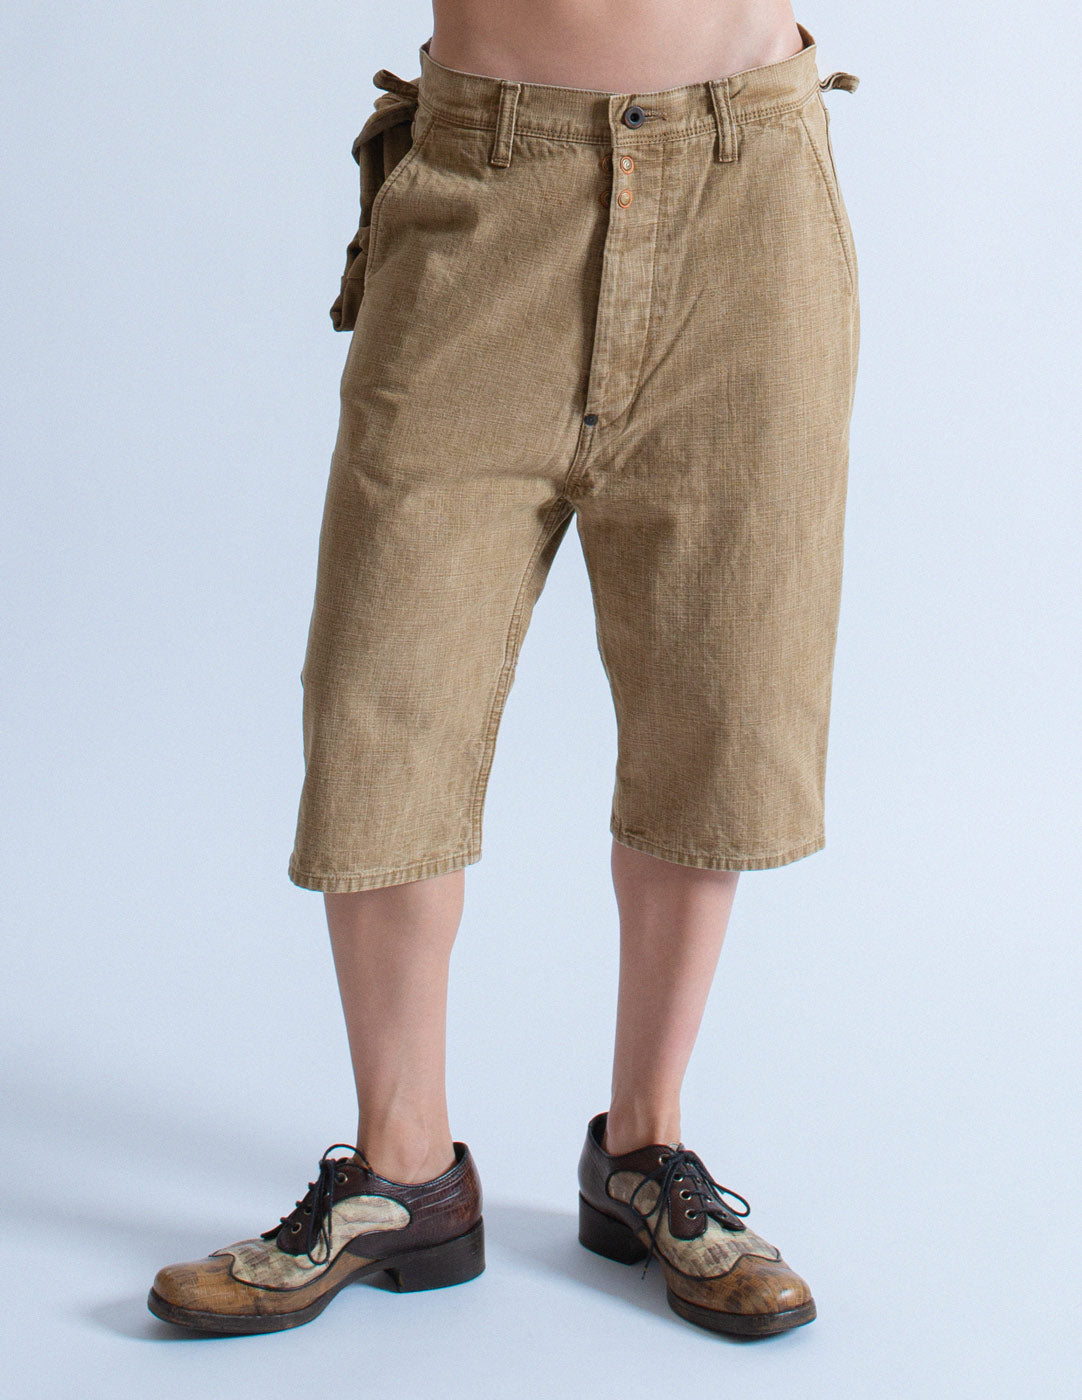 Kapital cargo shorts with hip bag front detail